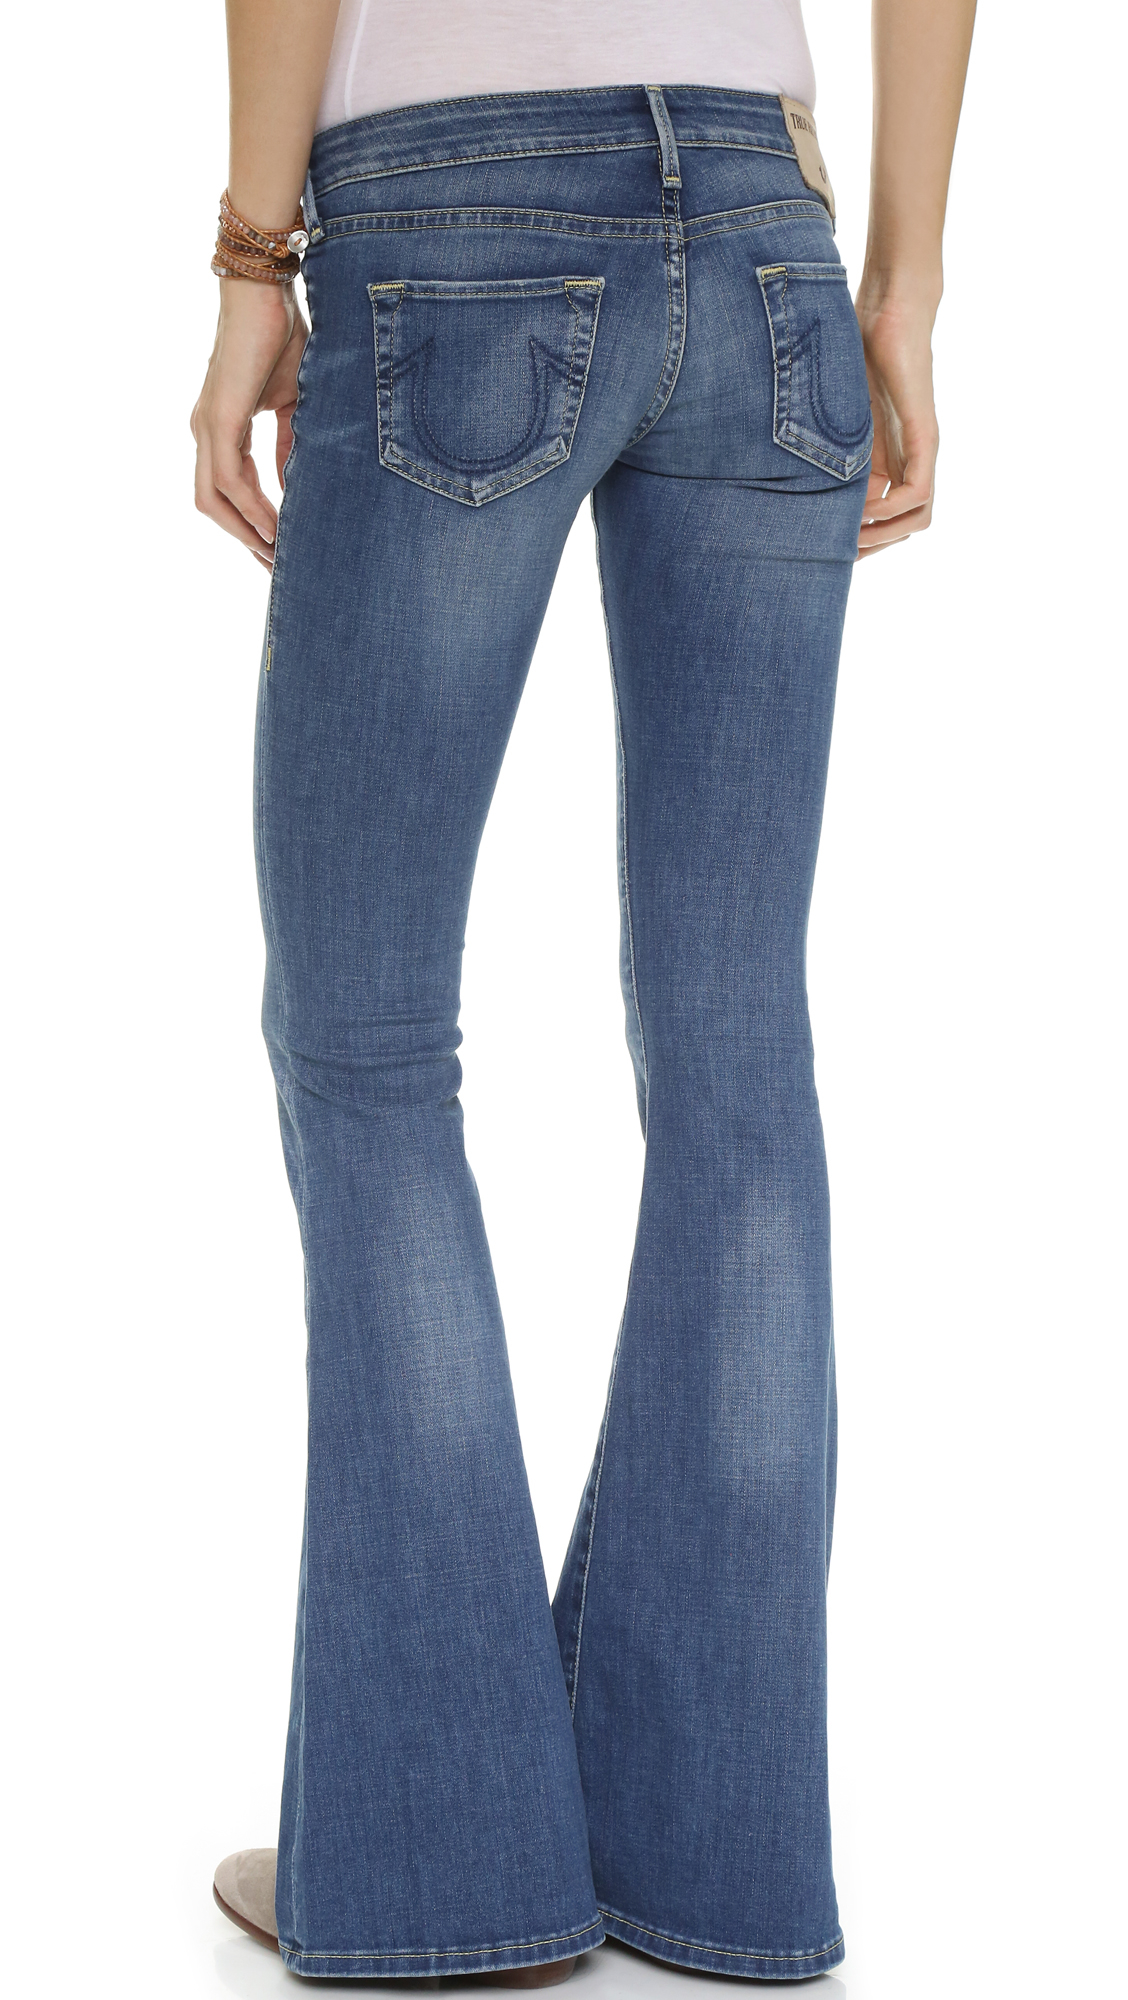 Lyst - True Religion Karlie Bell Bottom Jeans in Blue